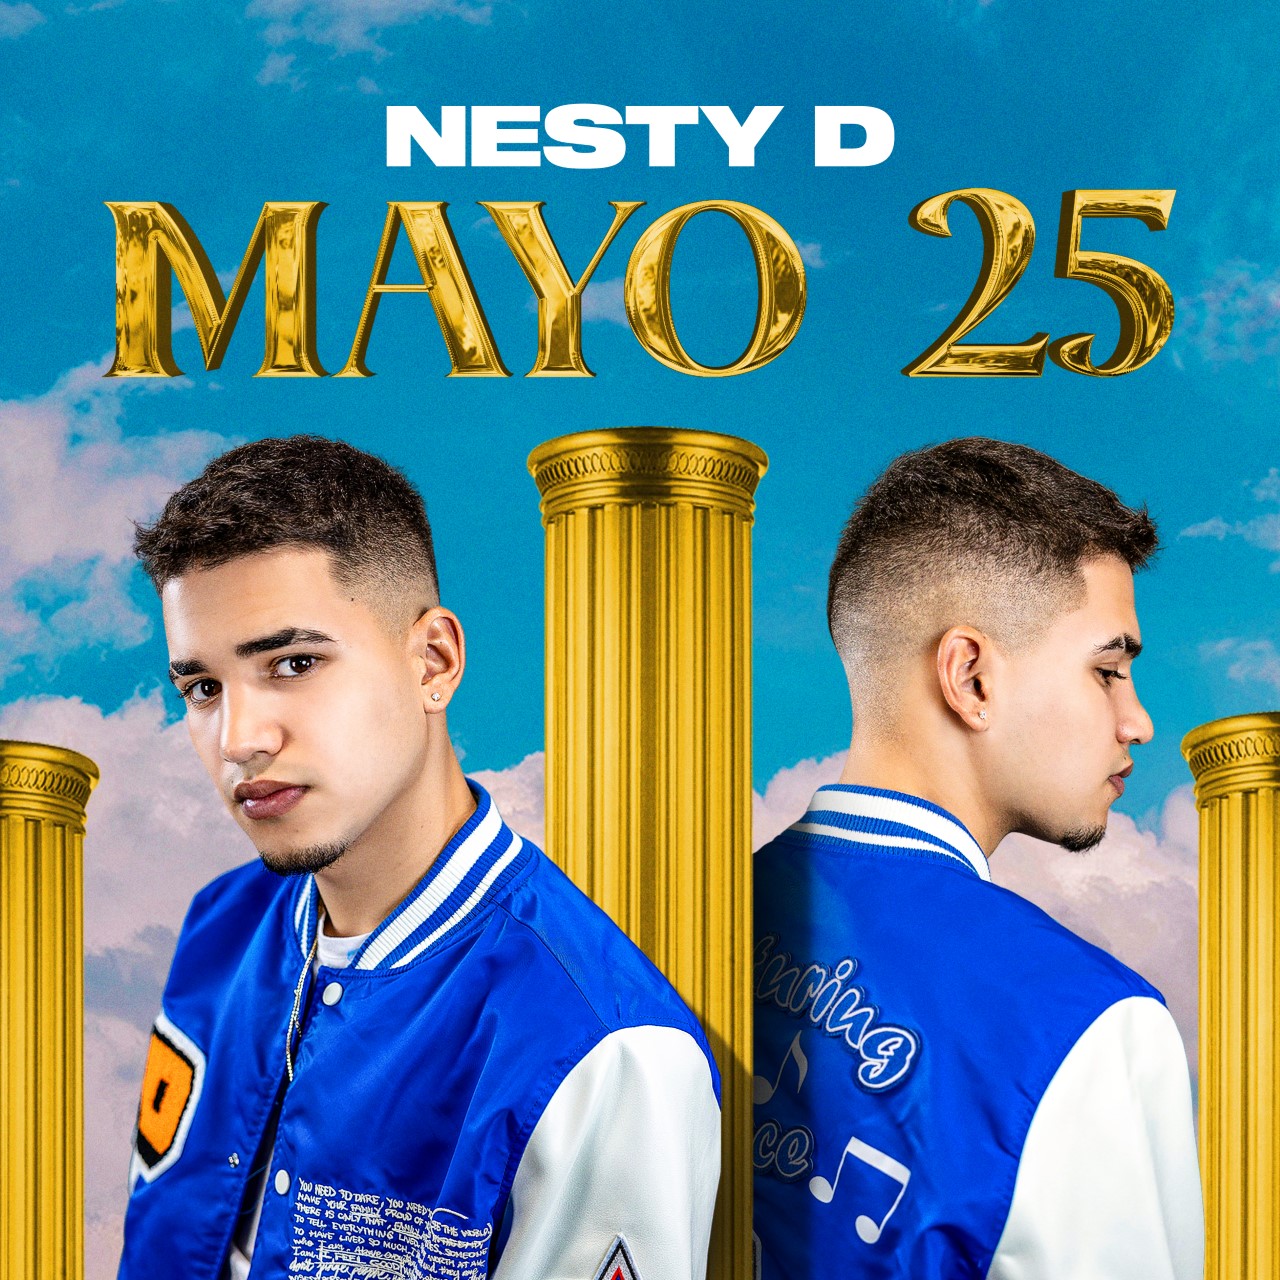 NESTY D lanza su primer álbum “Mayo 25”